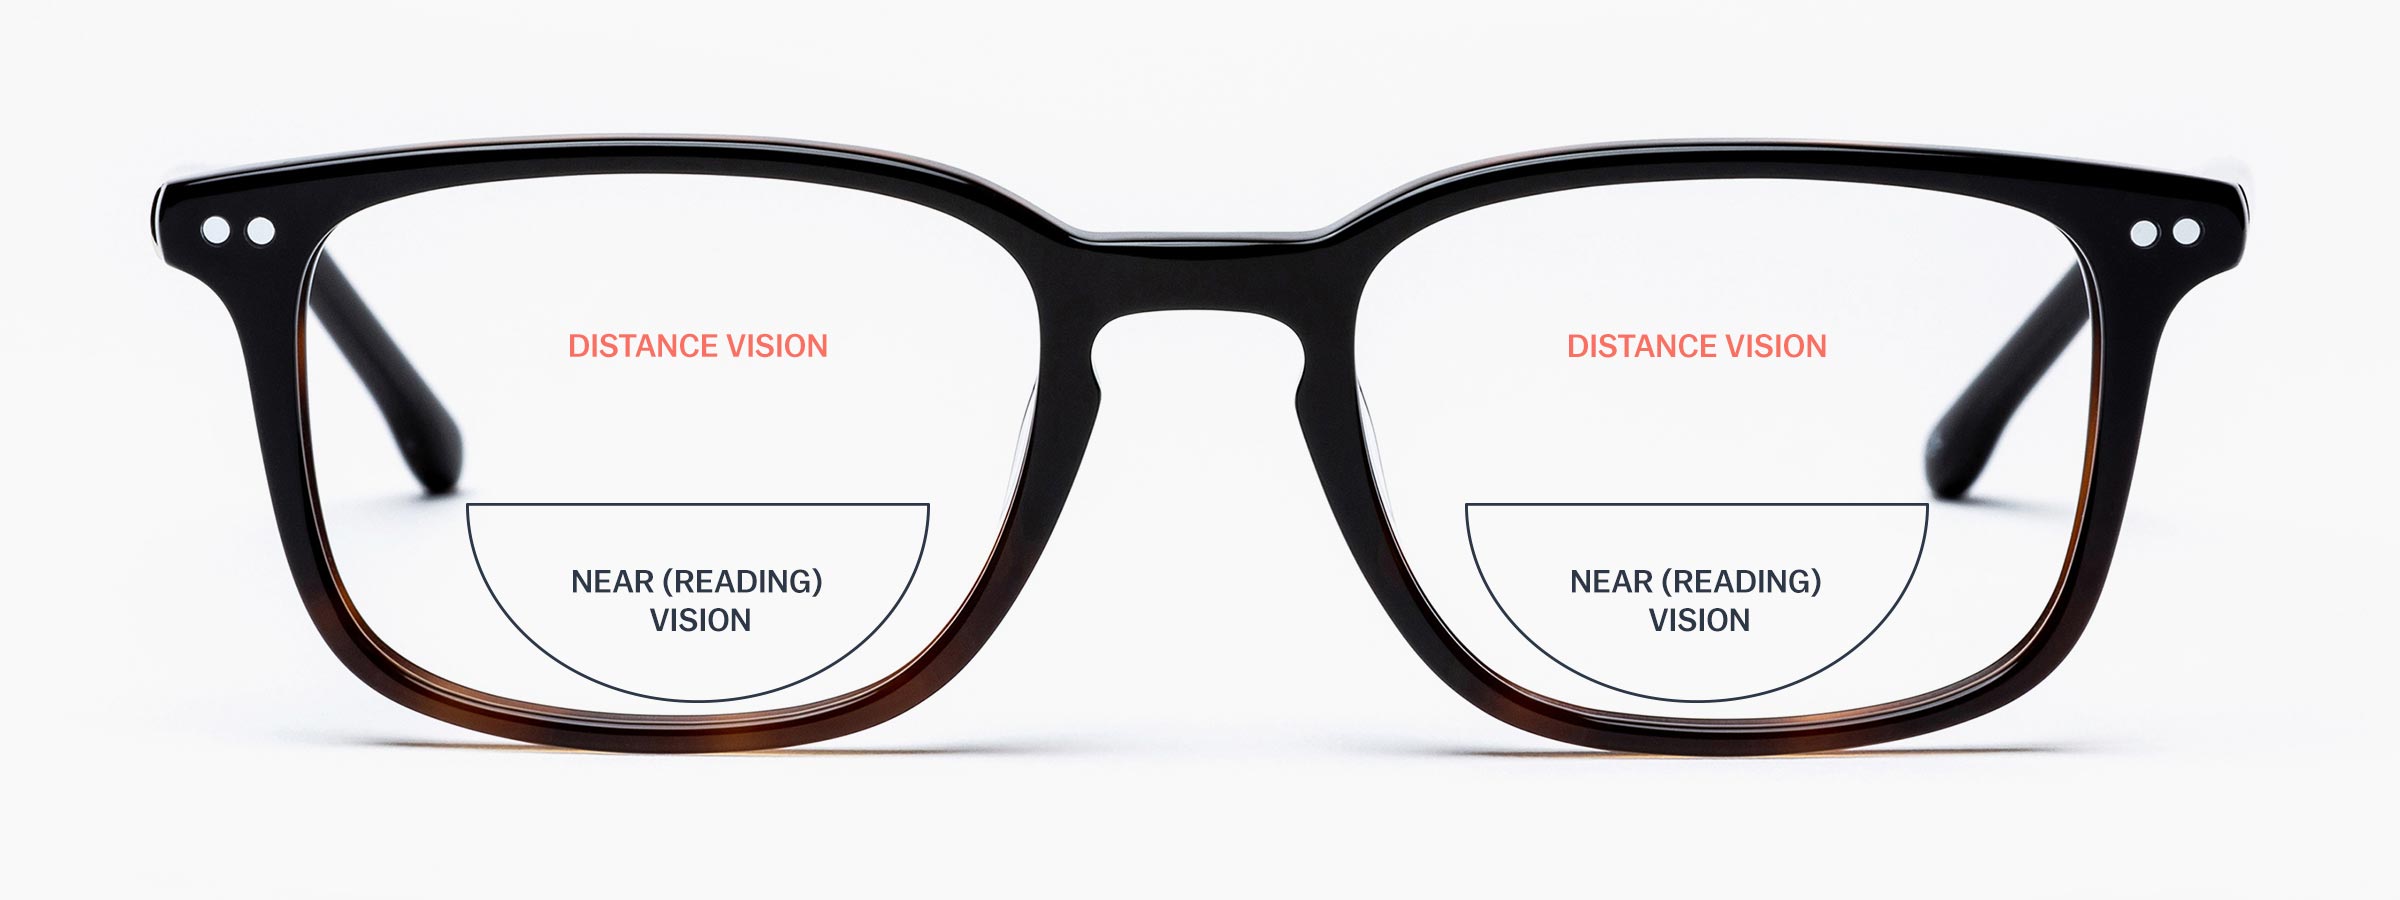 Glasses Direct ™ Bifocals Explained